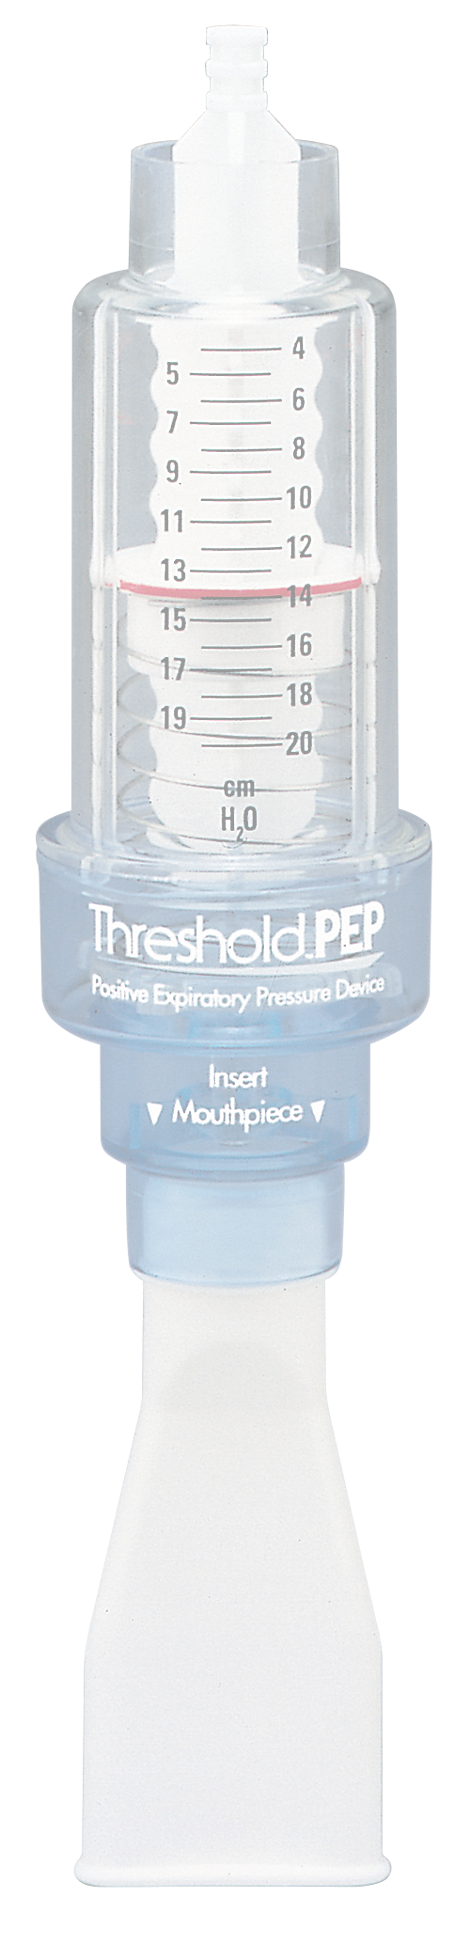 Threshold Positive expiratory pressure device